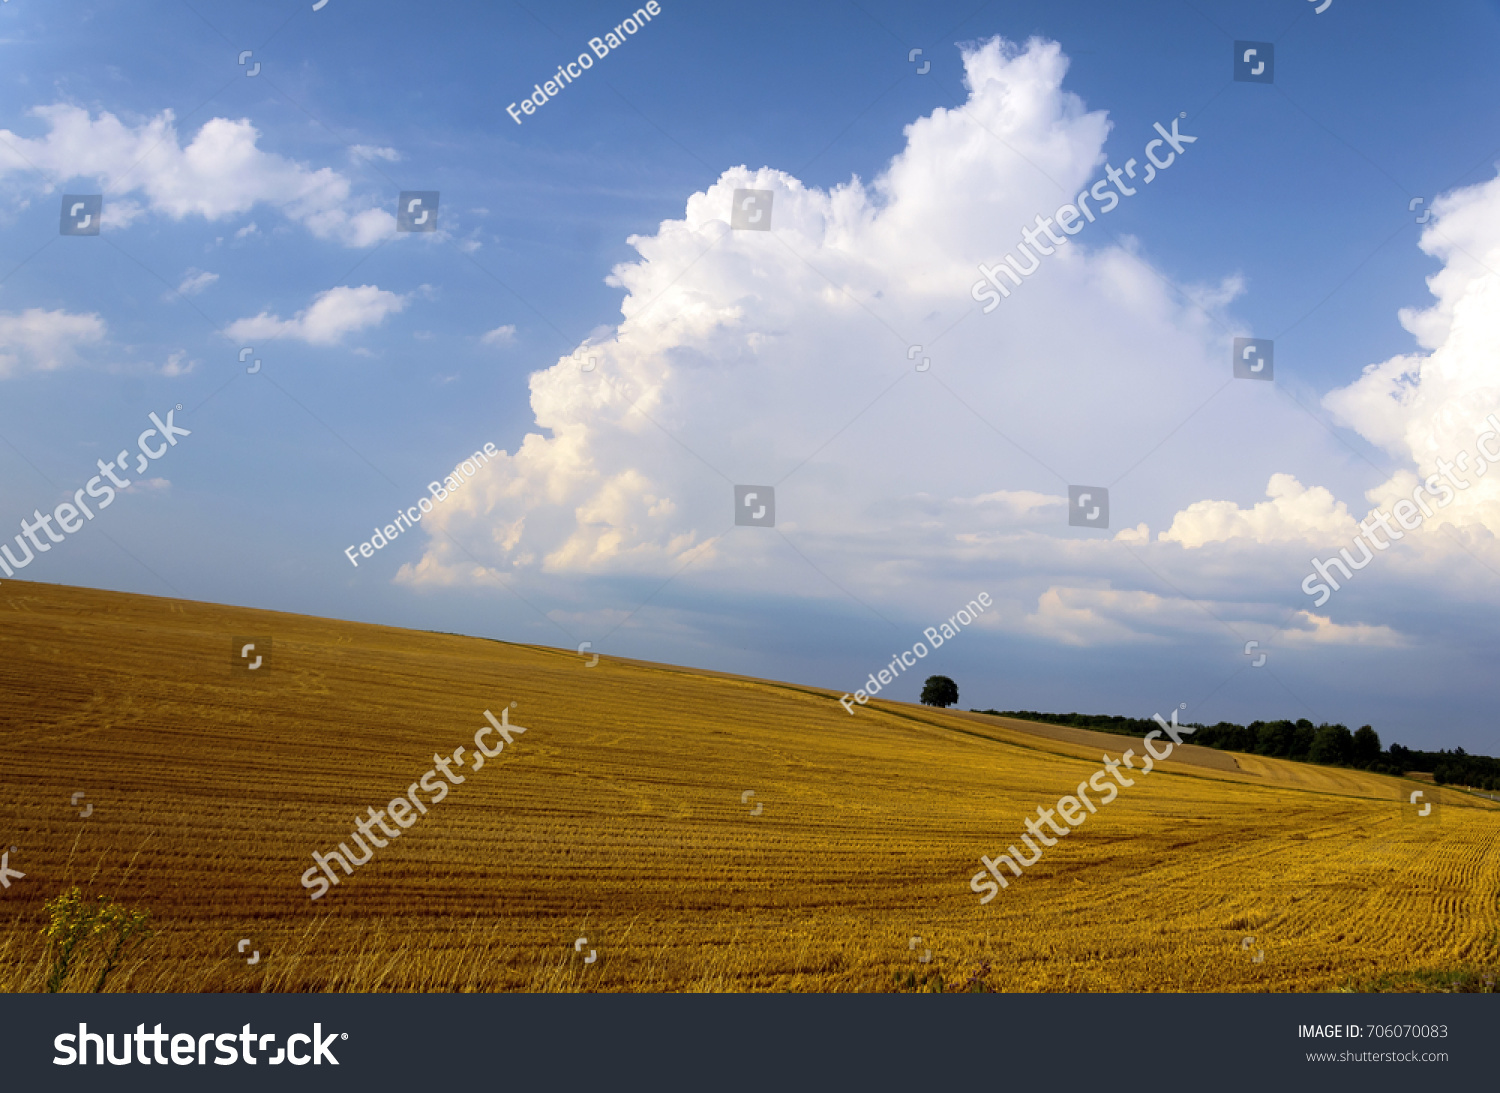 stock-photo-summer-landscape-wheat-field